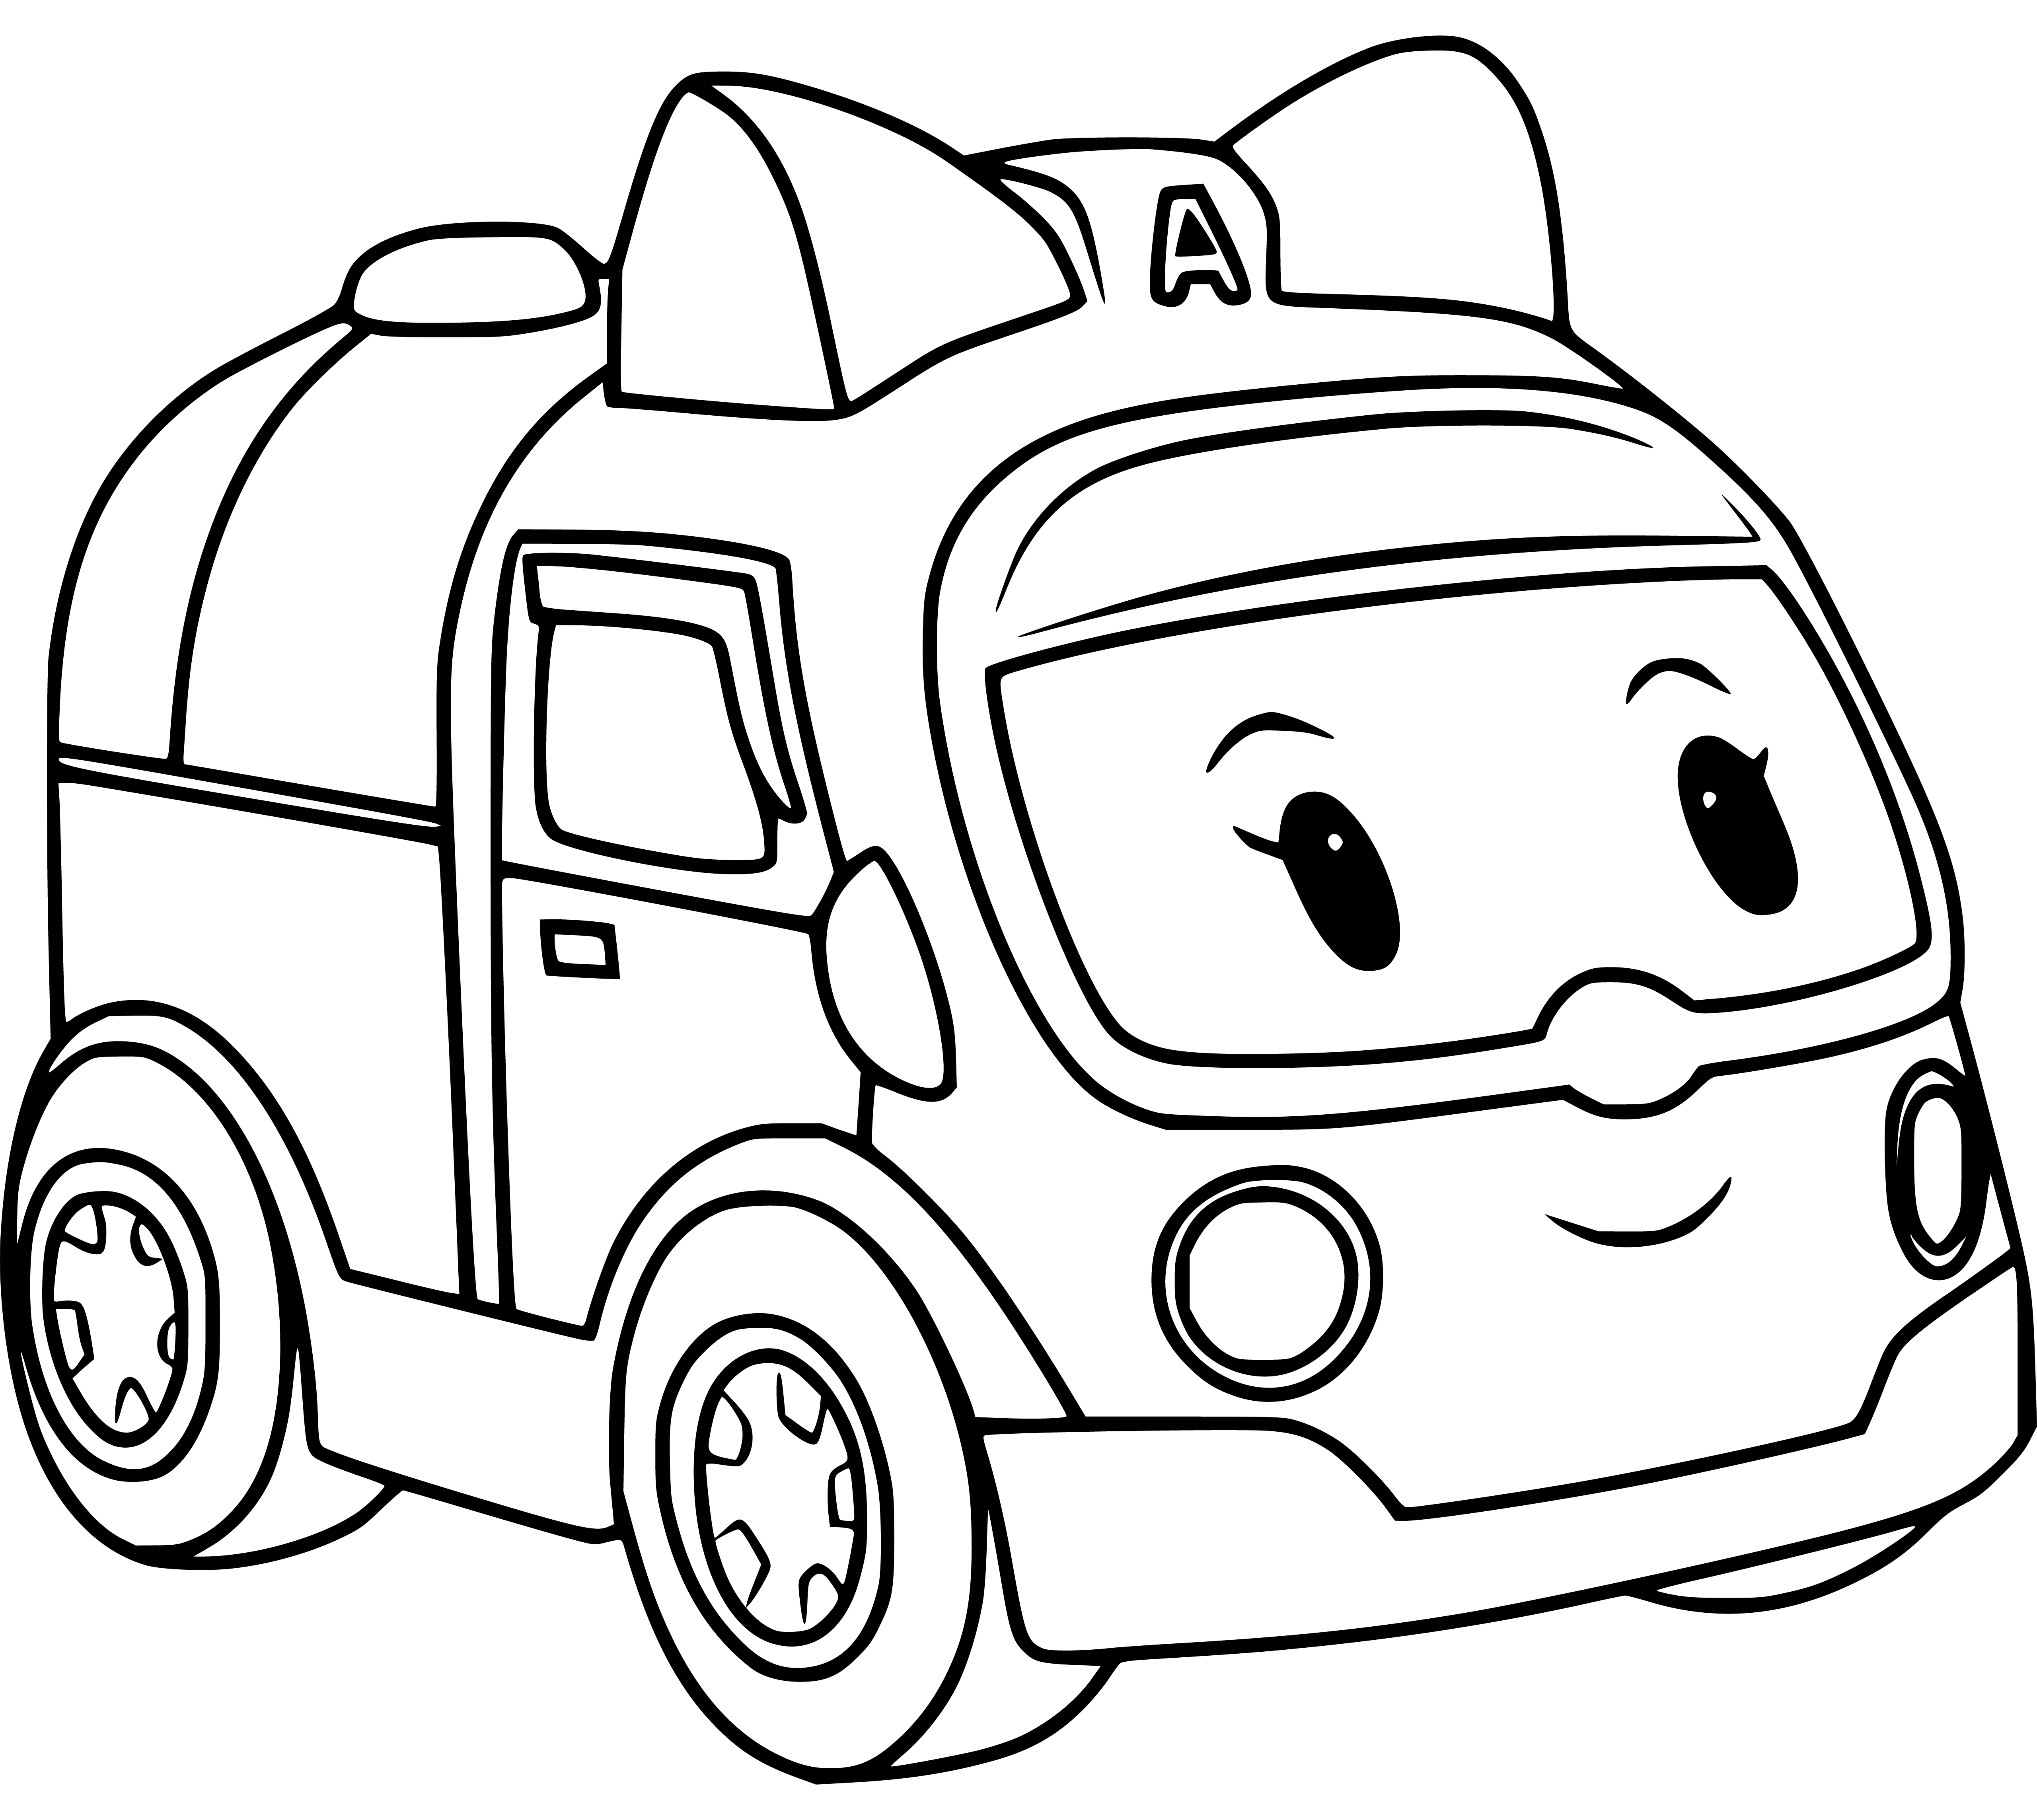 Ambulance Amber Coloring Page for Kids to Print - SheetalColor.com